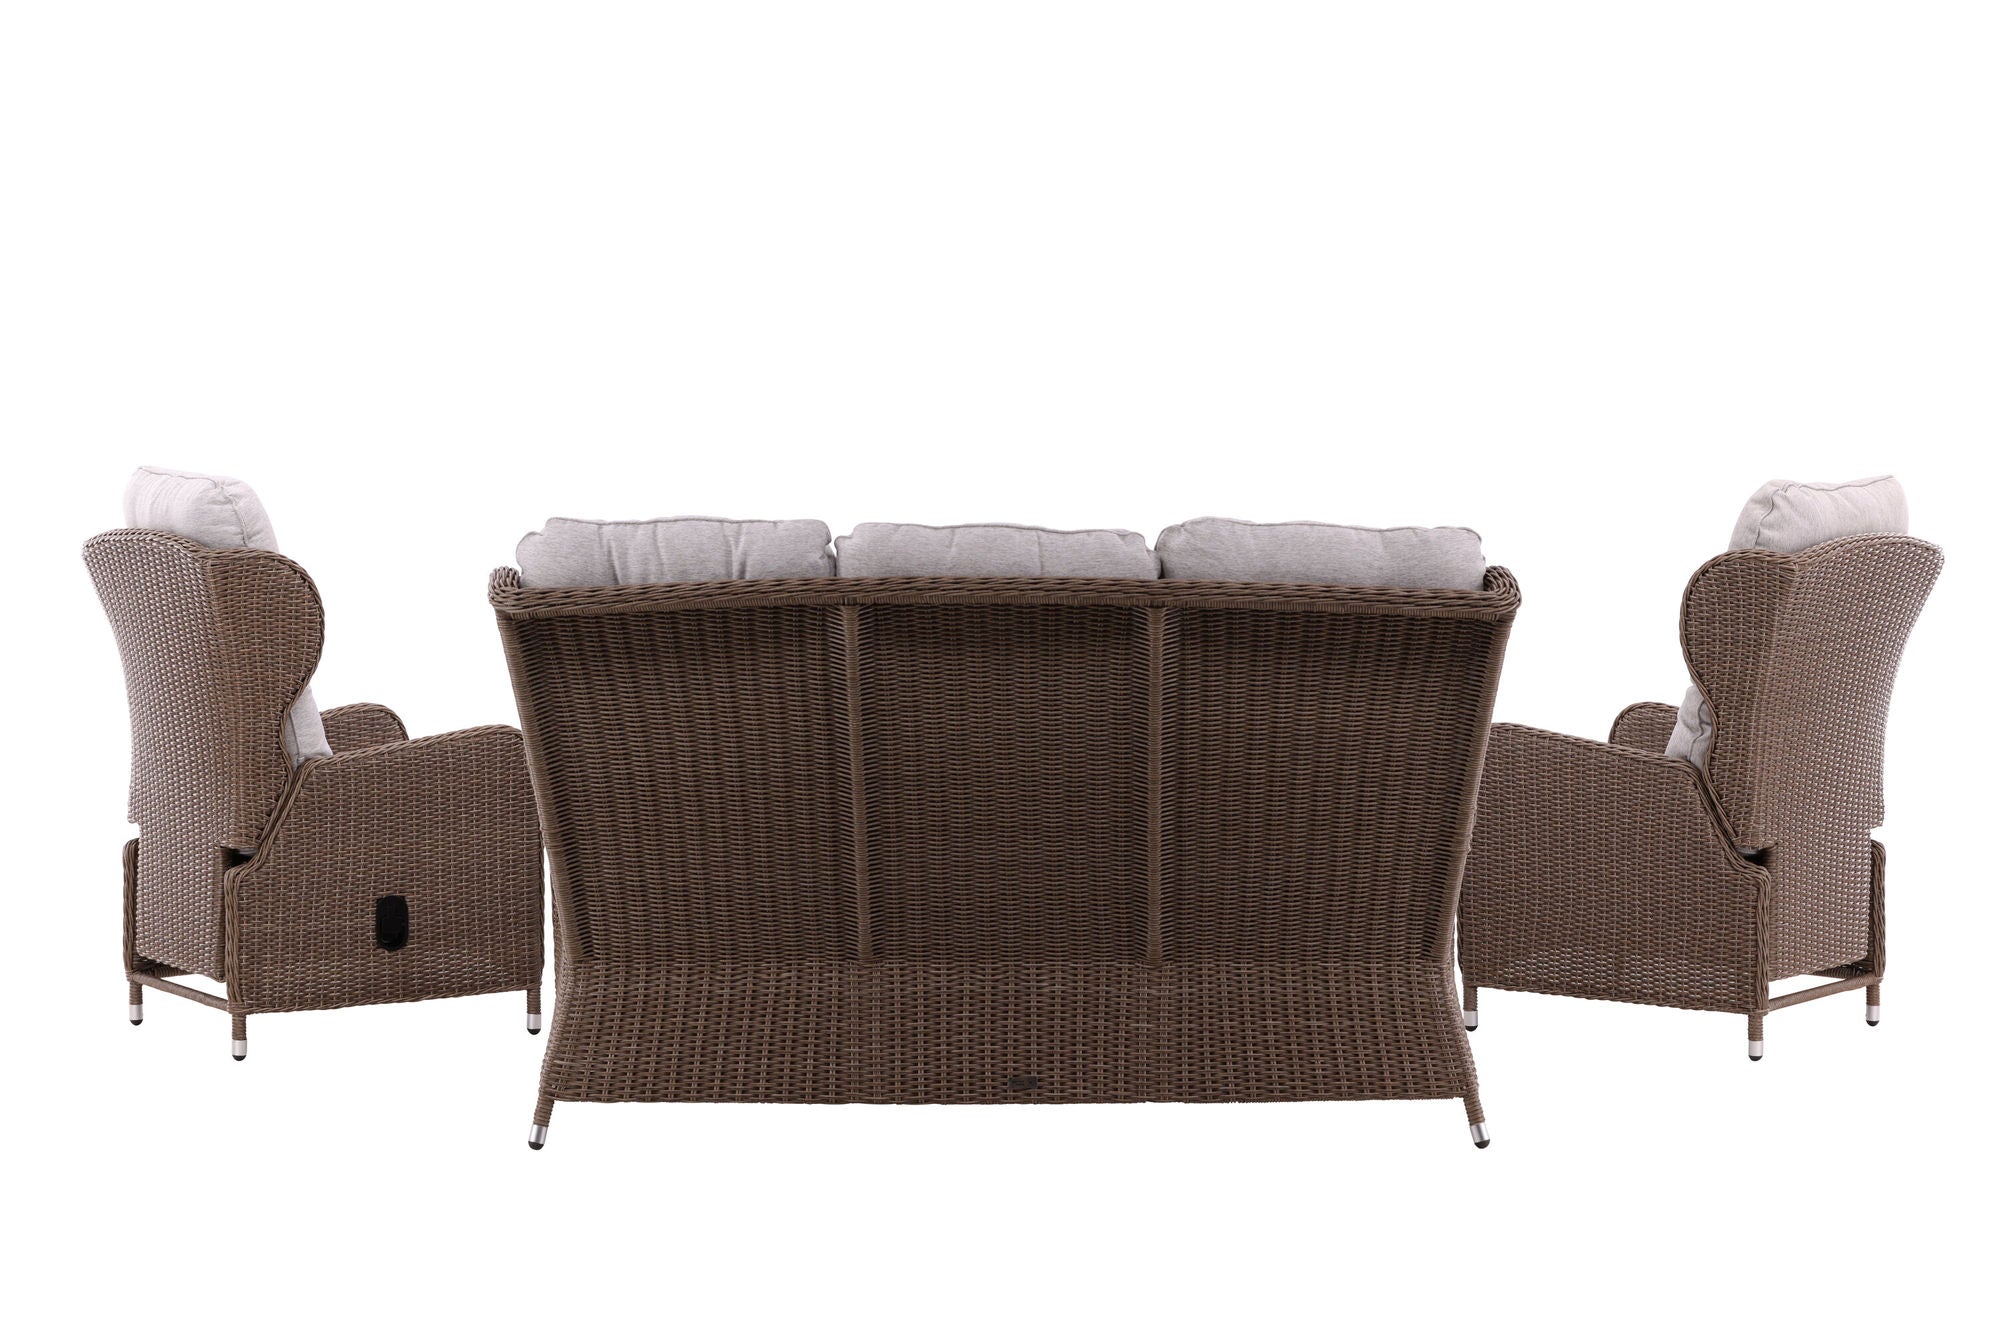 Venture Home Washington Sofa set (Recliner) - Nature/Nature